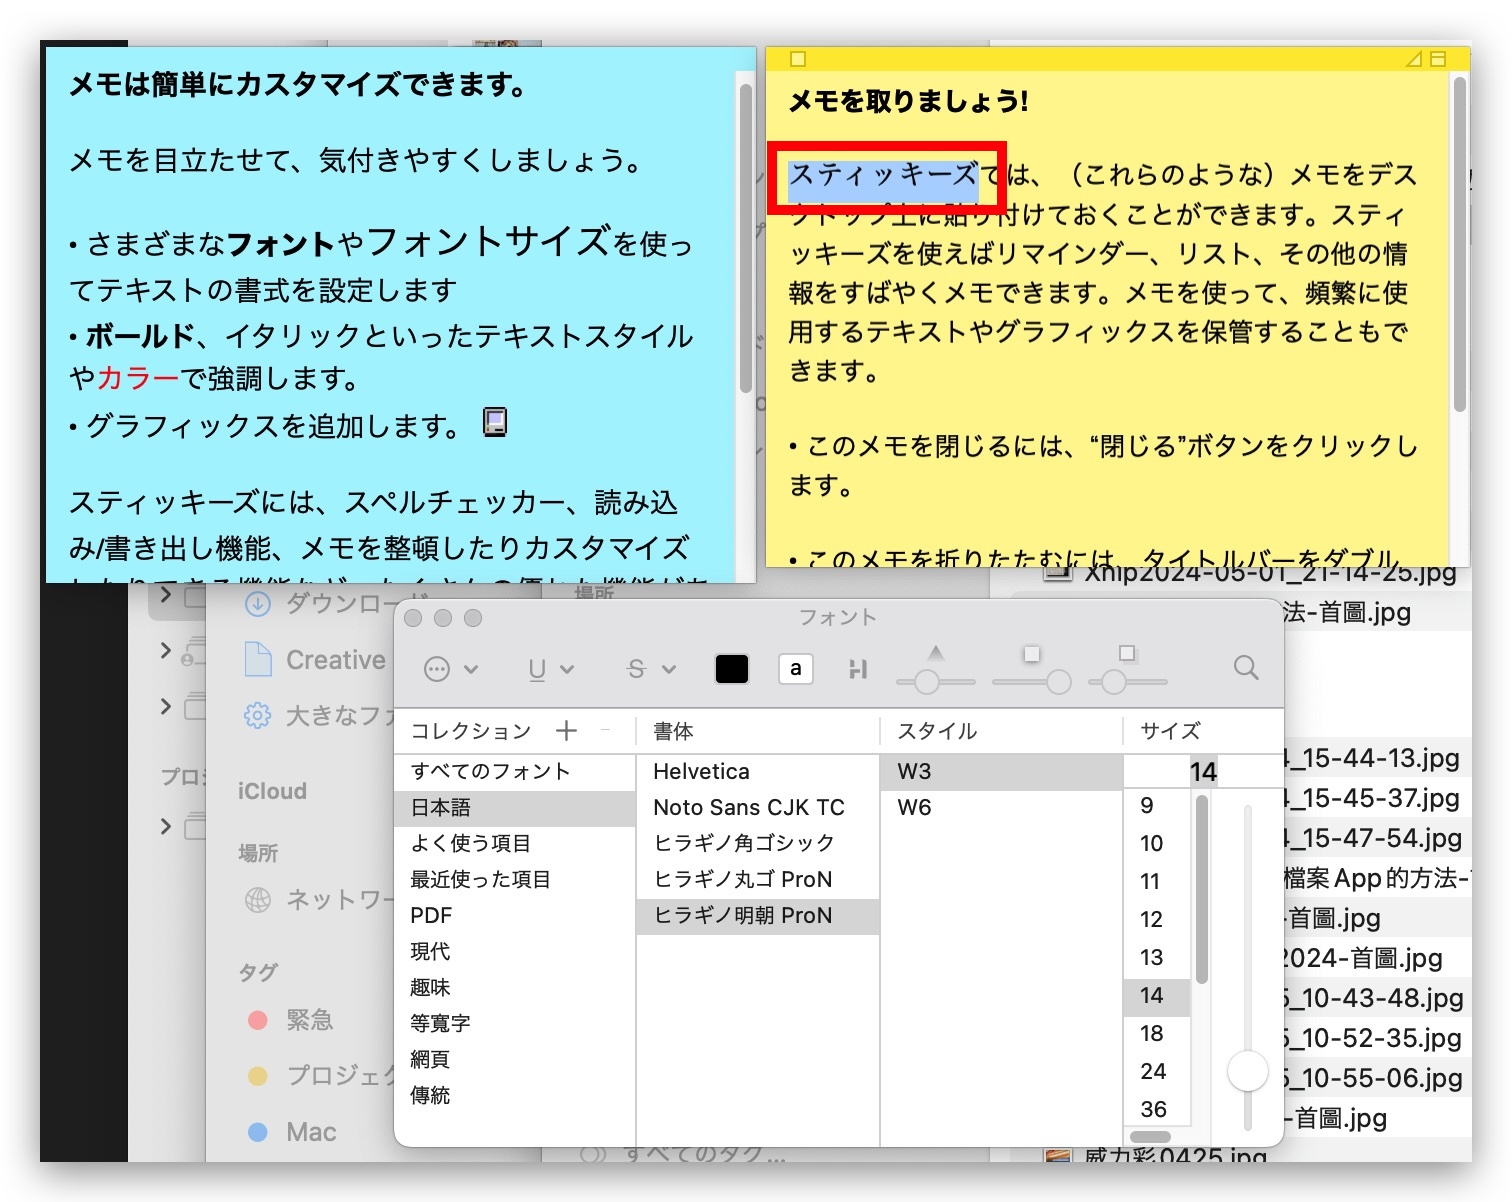 Mac のメモ、付箋機能を開く：「スティッキーズ」アプリ